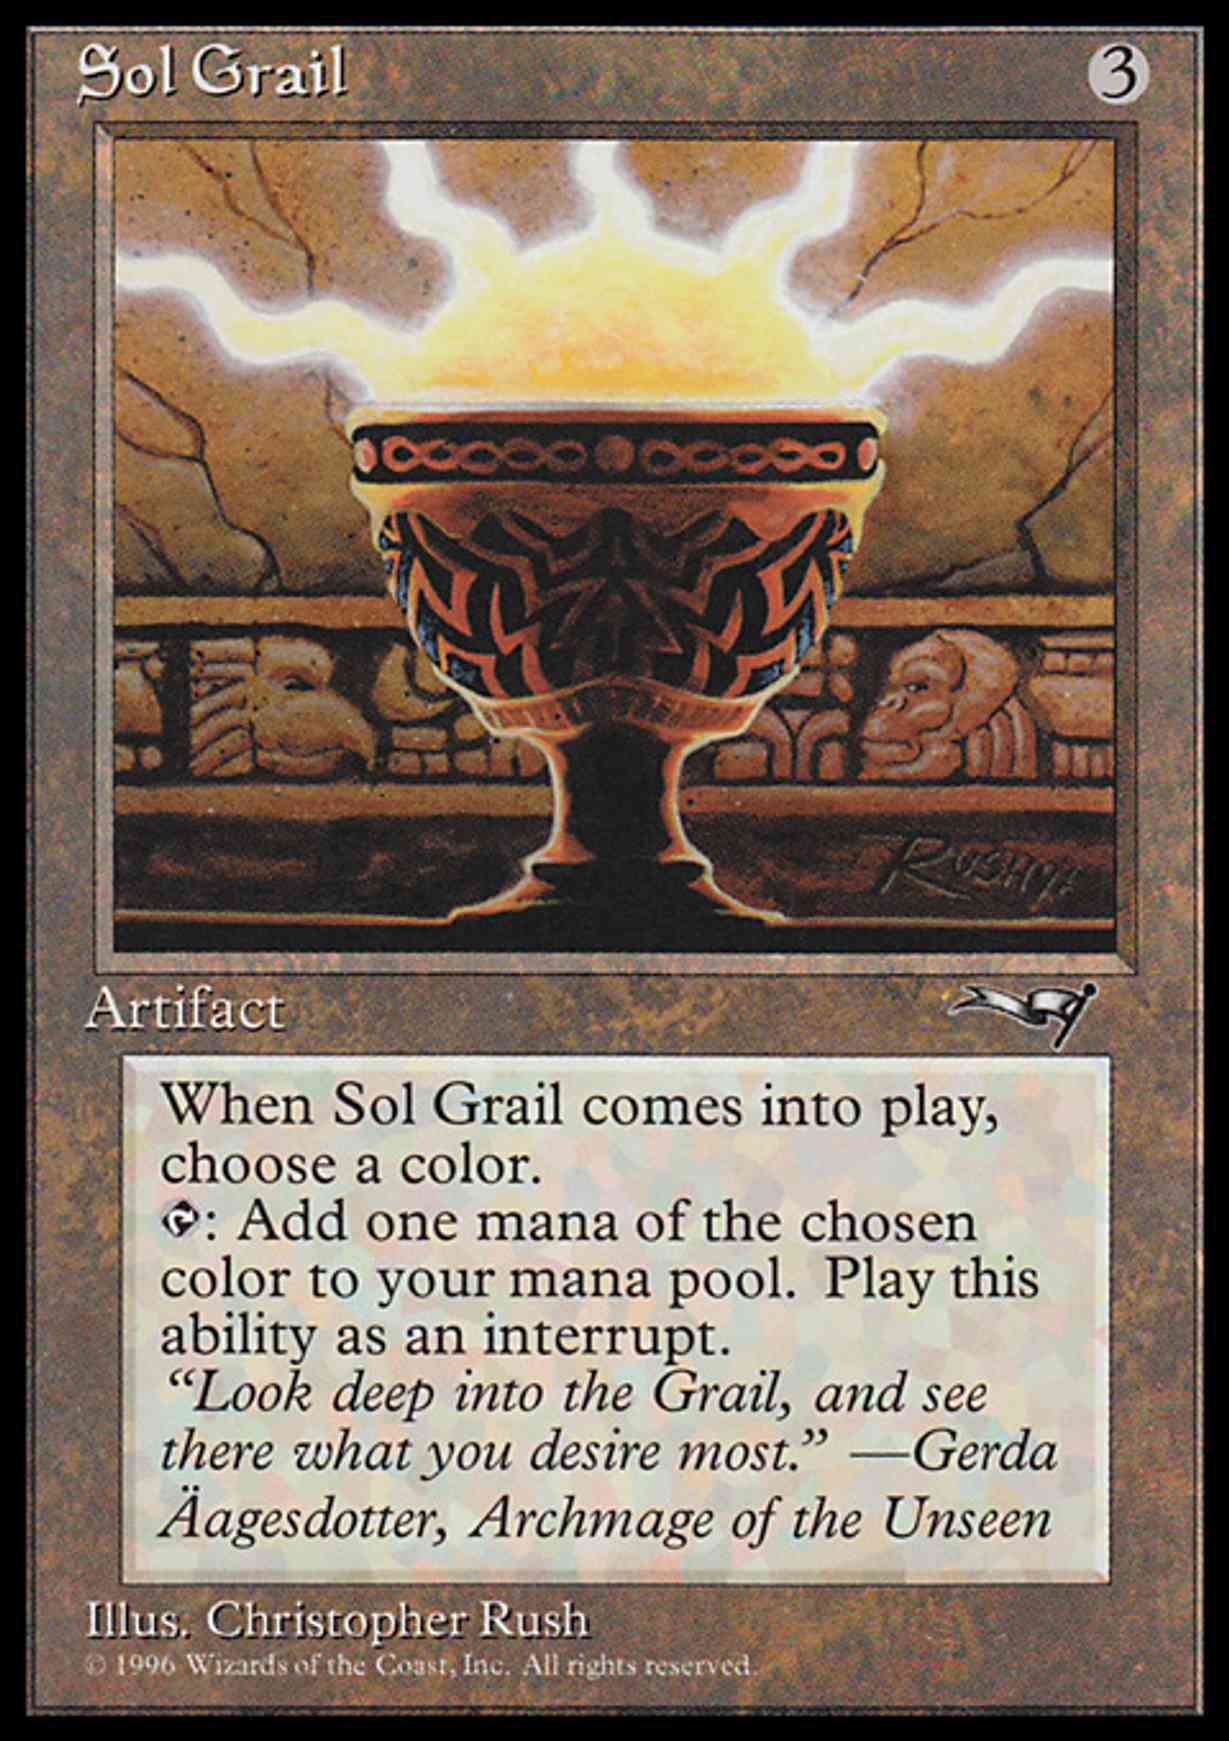 Sol Grail magic card front